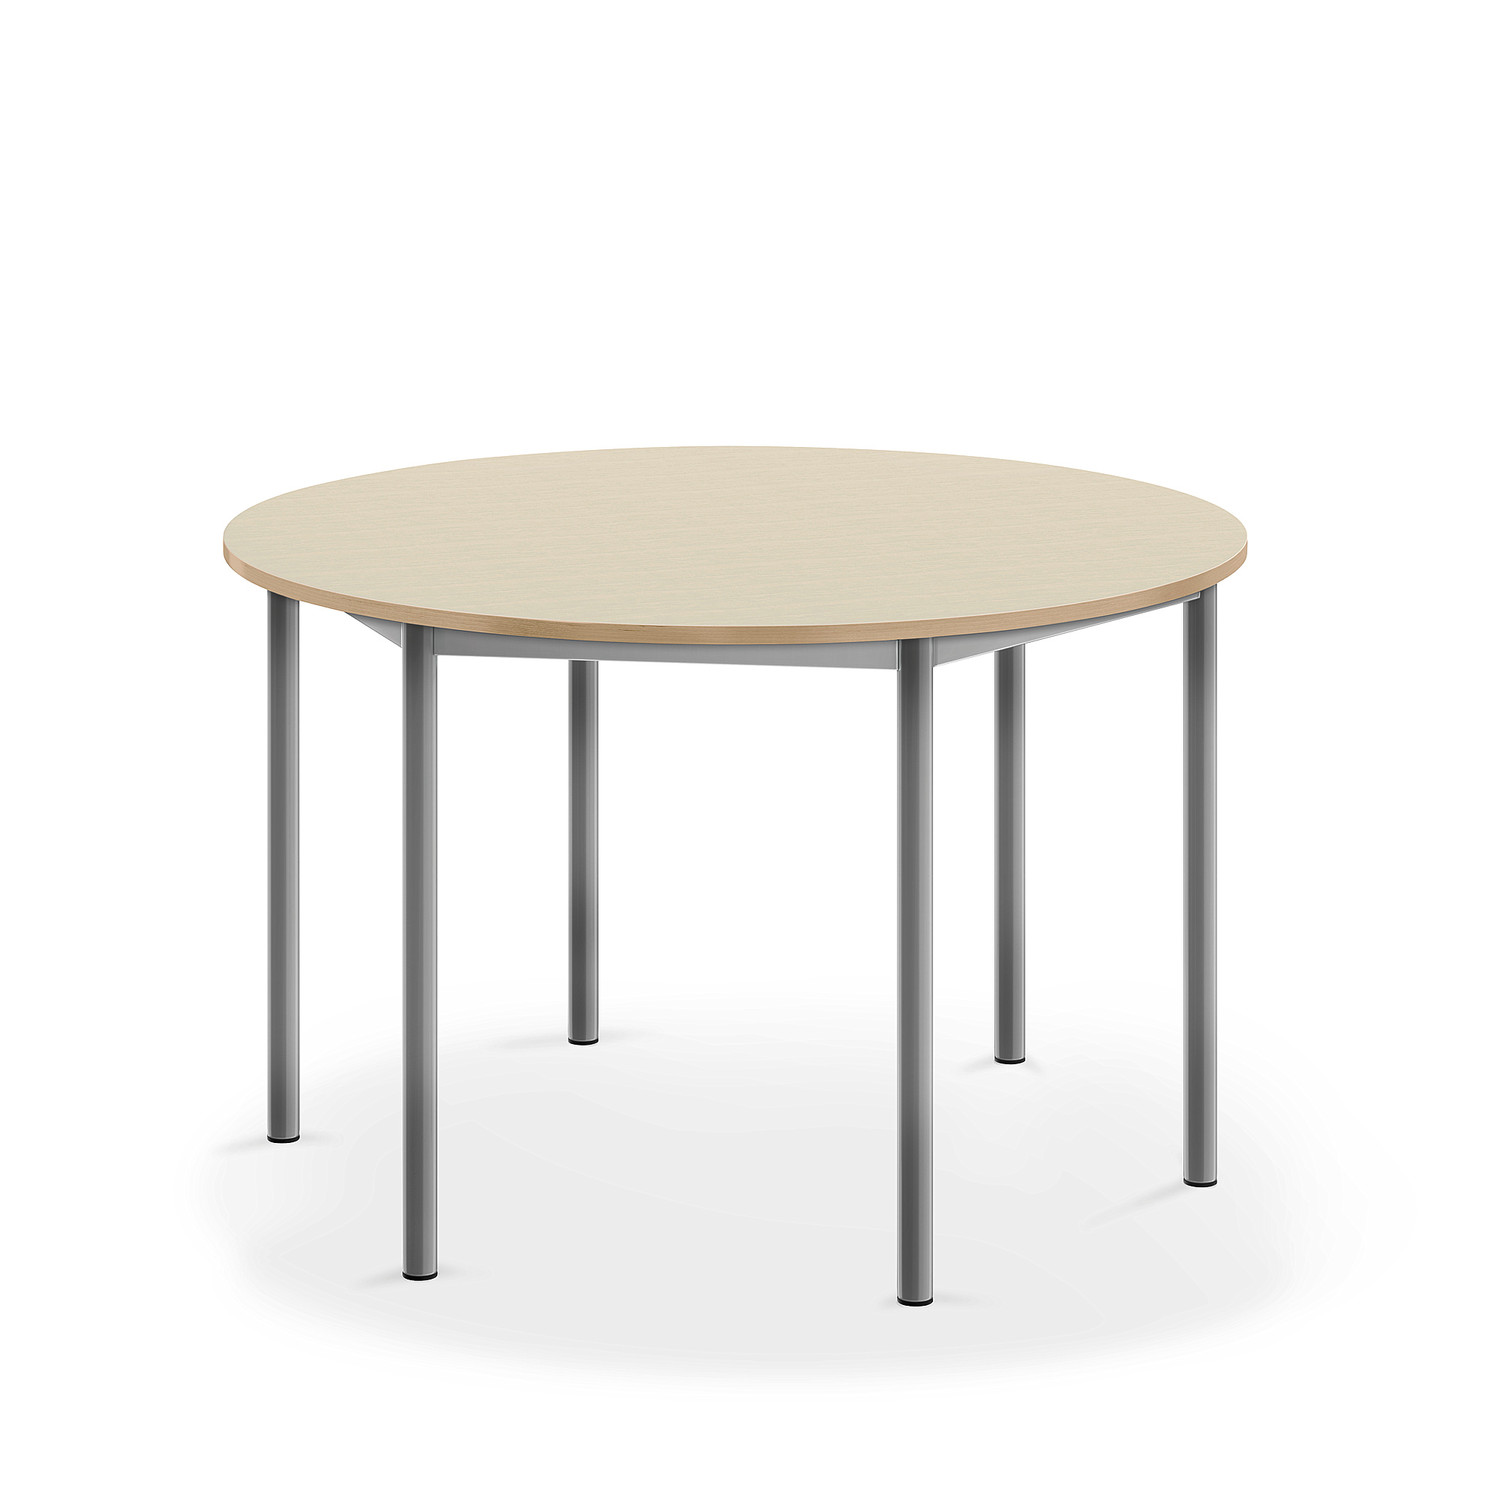 Stůl SONITUS, Ø1200x720 mm, stříbrné nohy, HPL deska, bříza